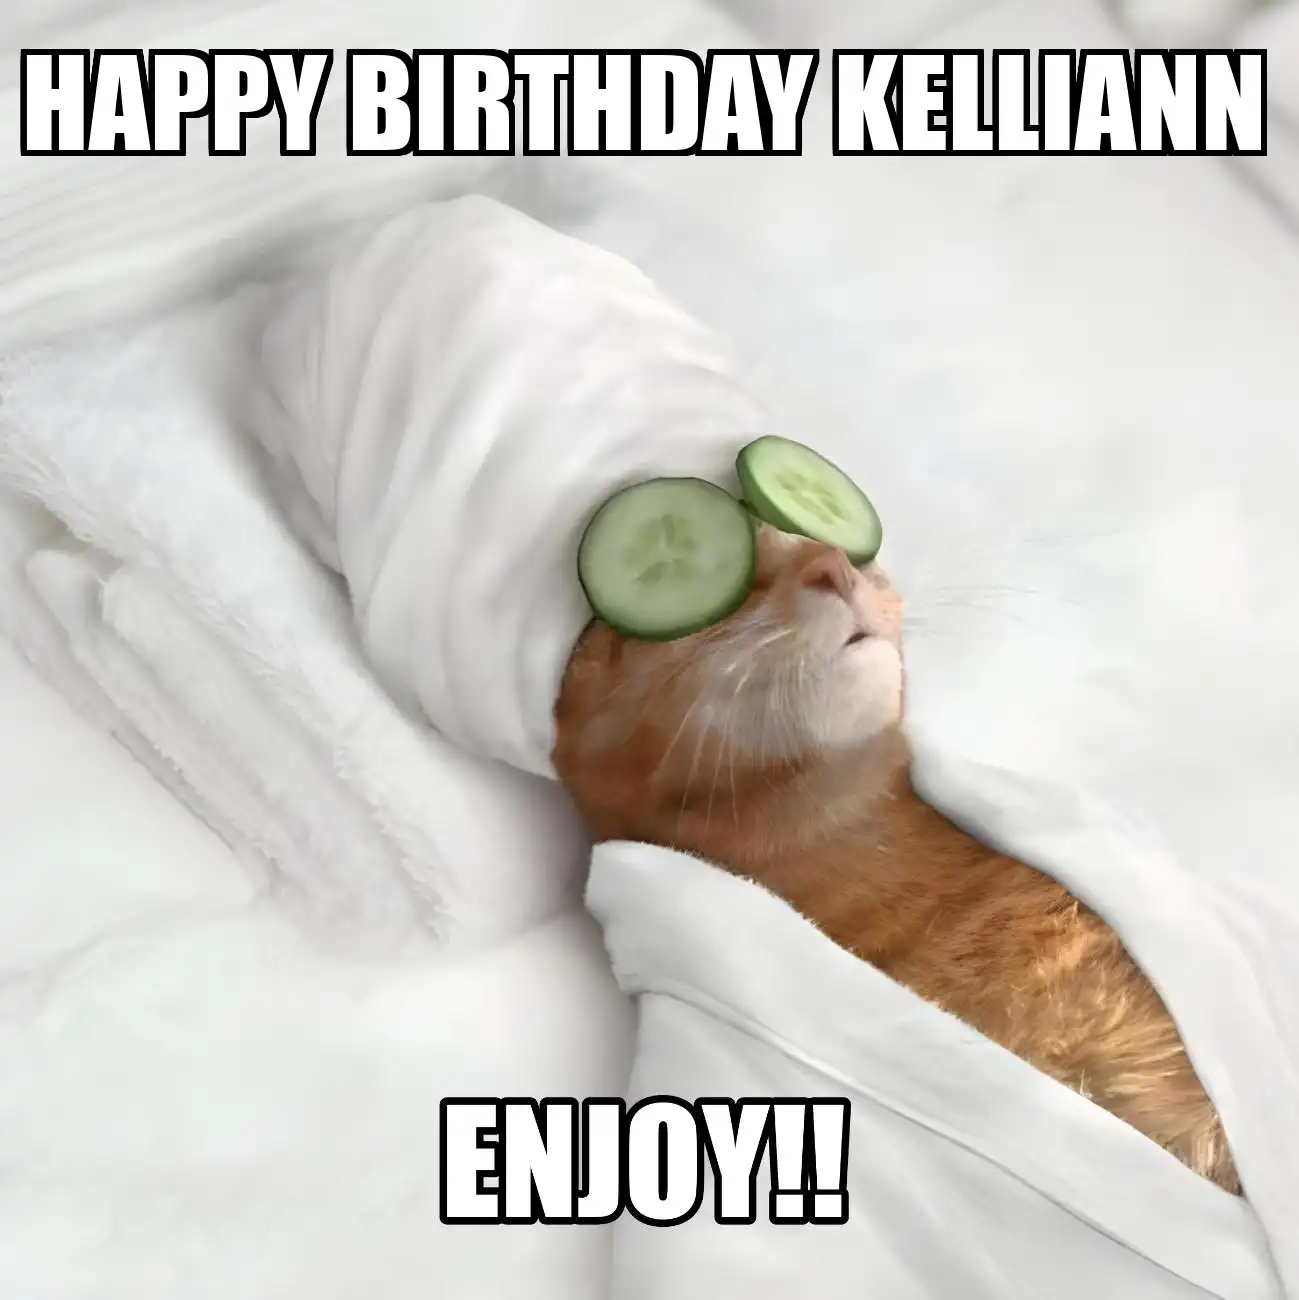 Happy Birthday Kelliann Enjoy Cat Meme